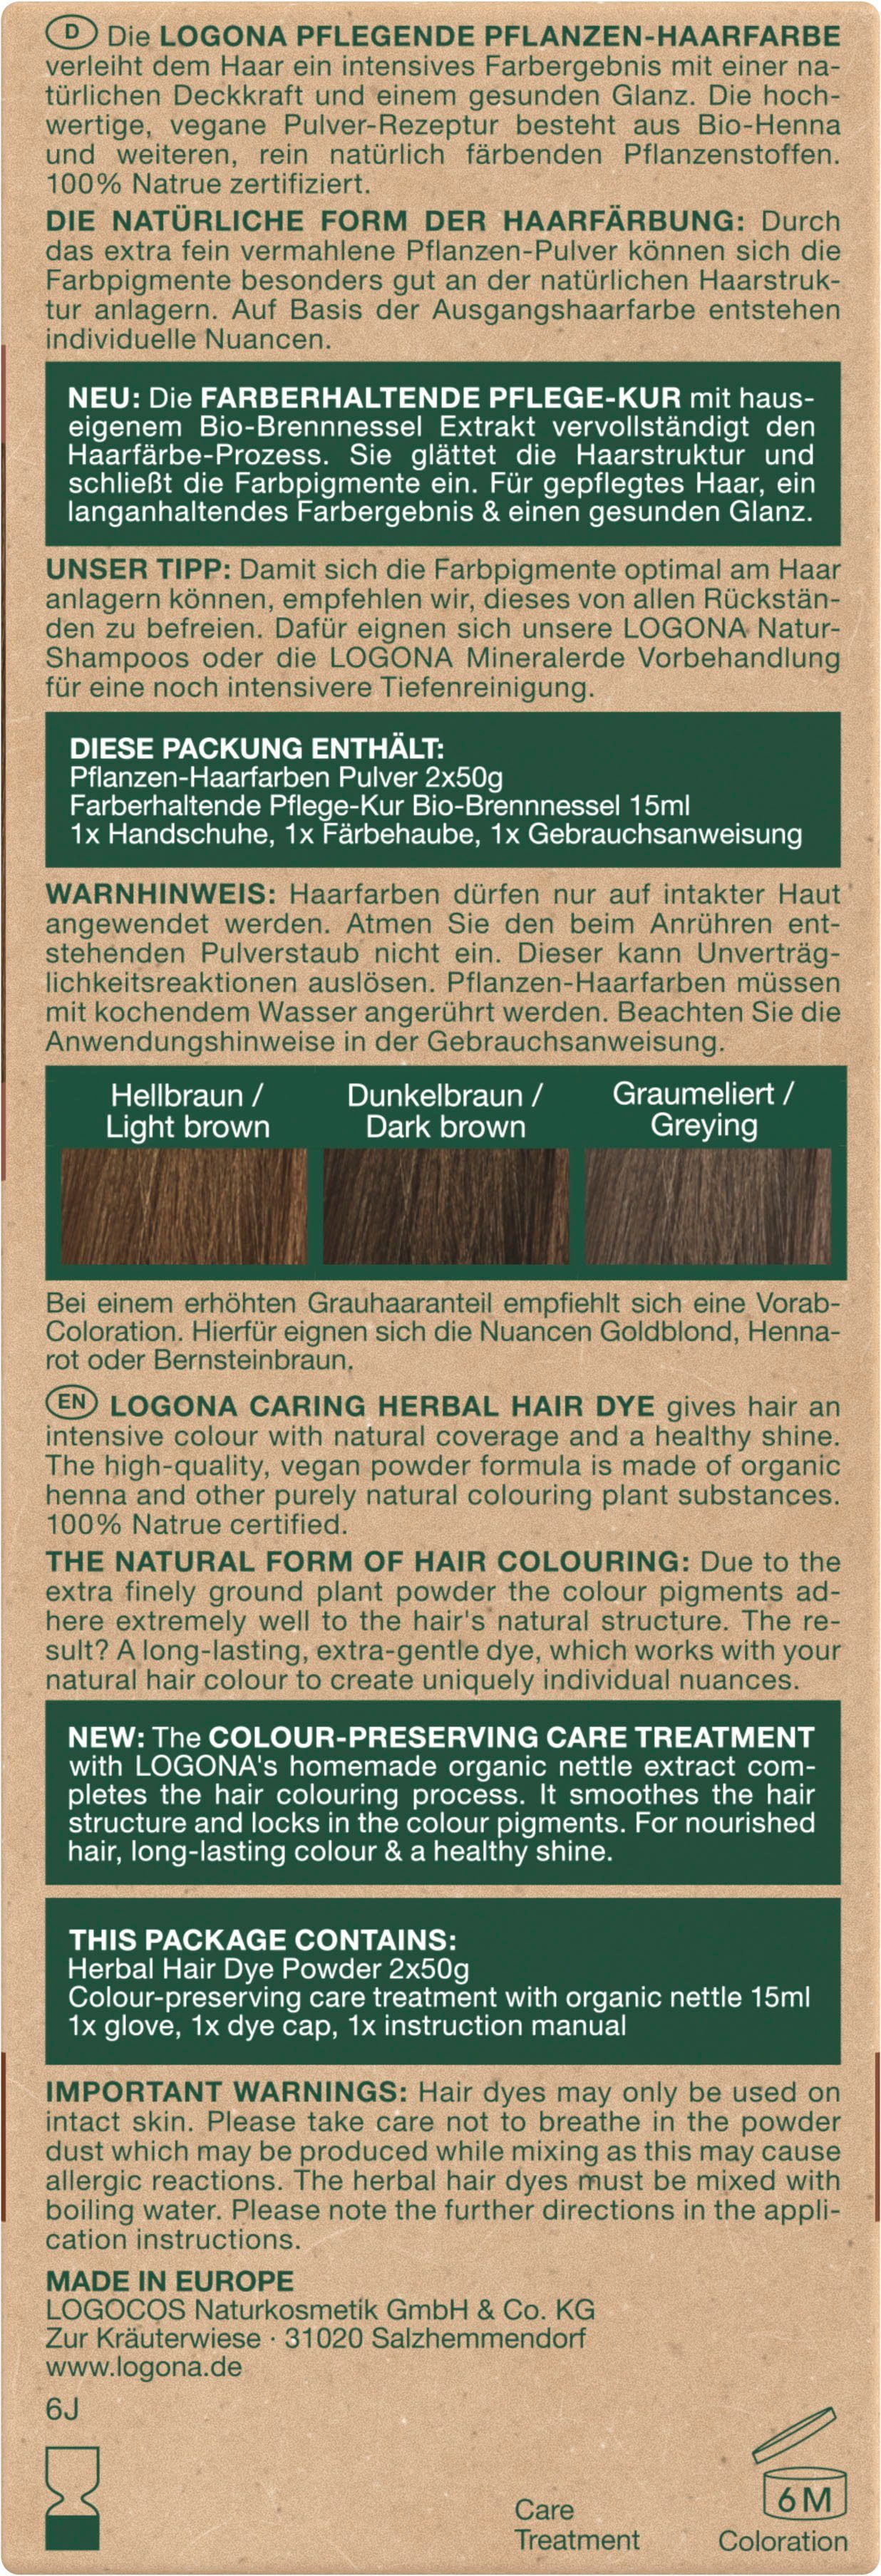 LOGONA Pulver Aschbraun 08 Pflanzen-Haarfarbe Haarfarbe